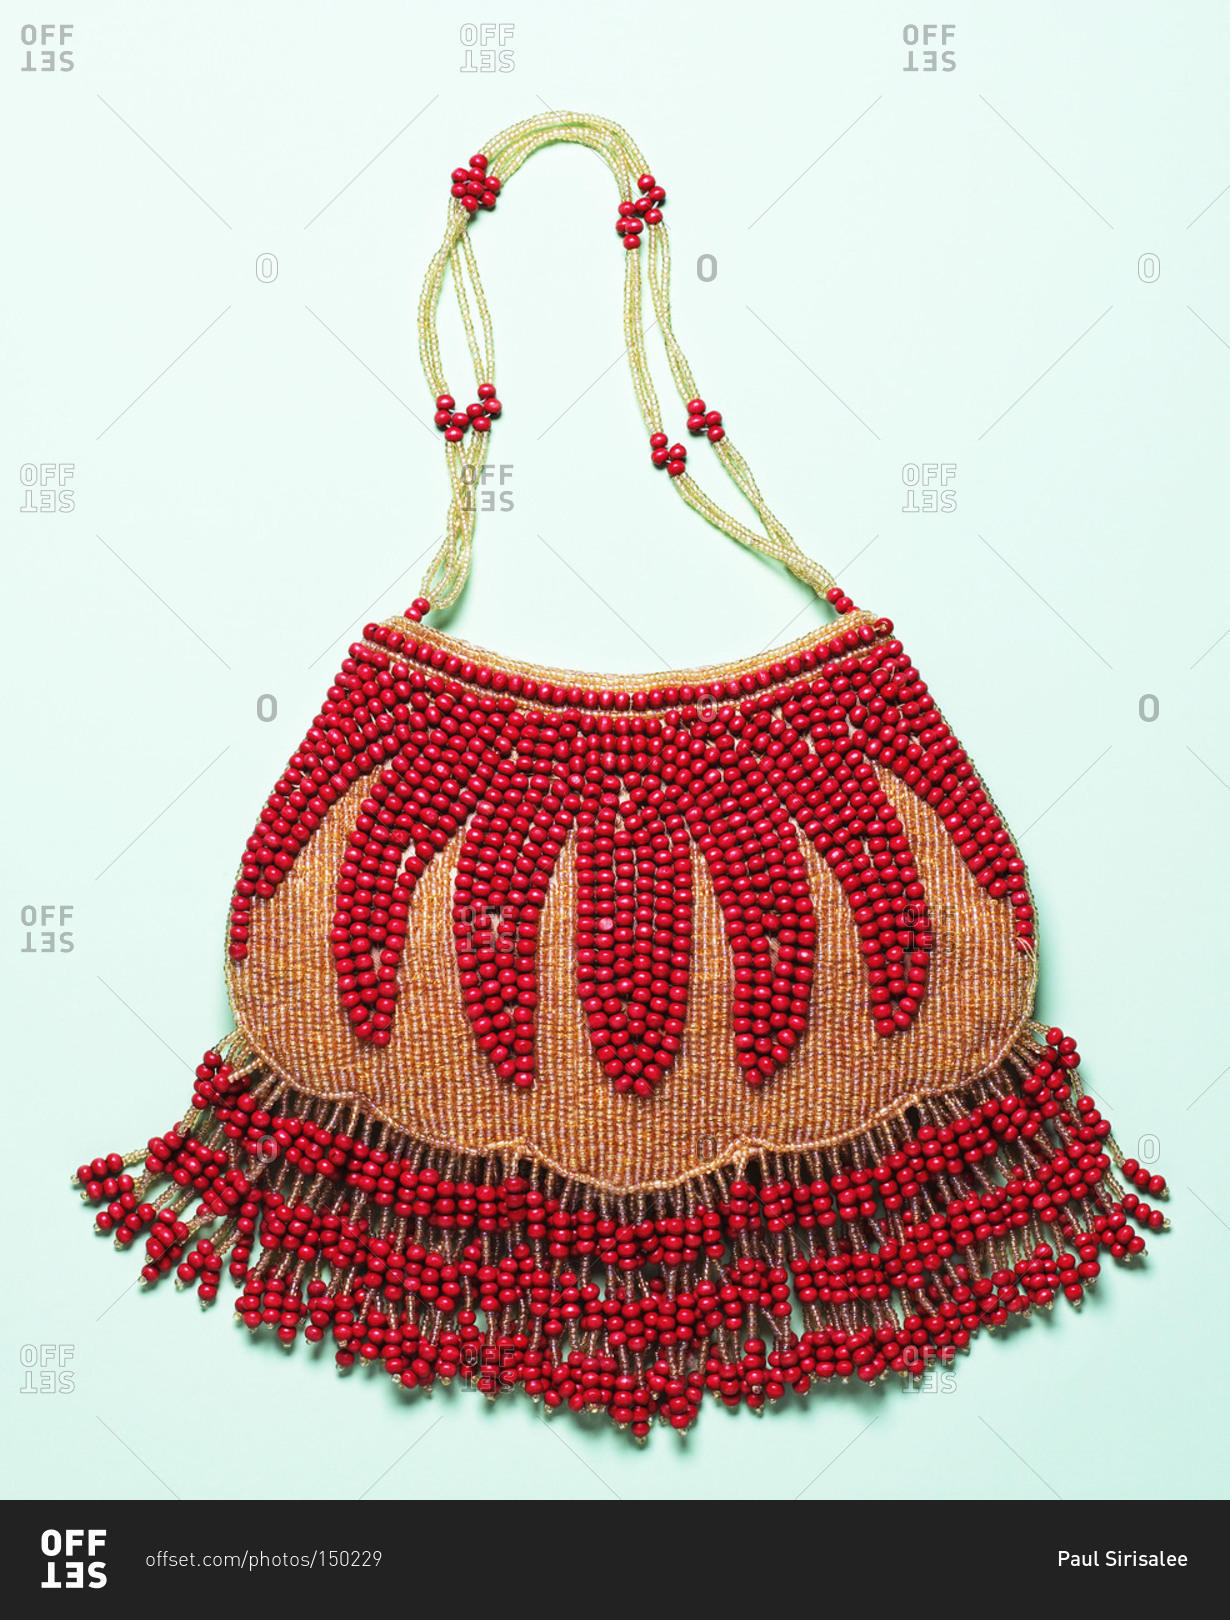 Handbag with red beadwork